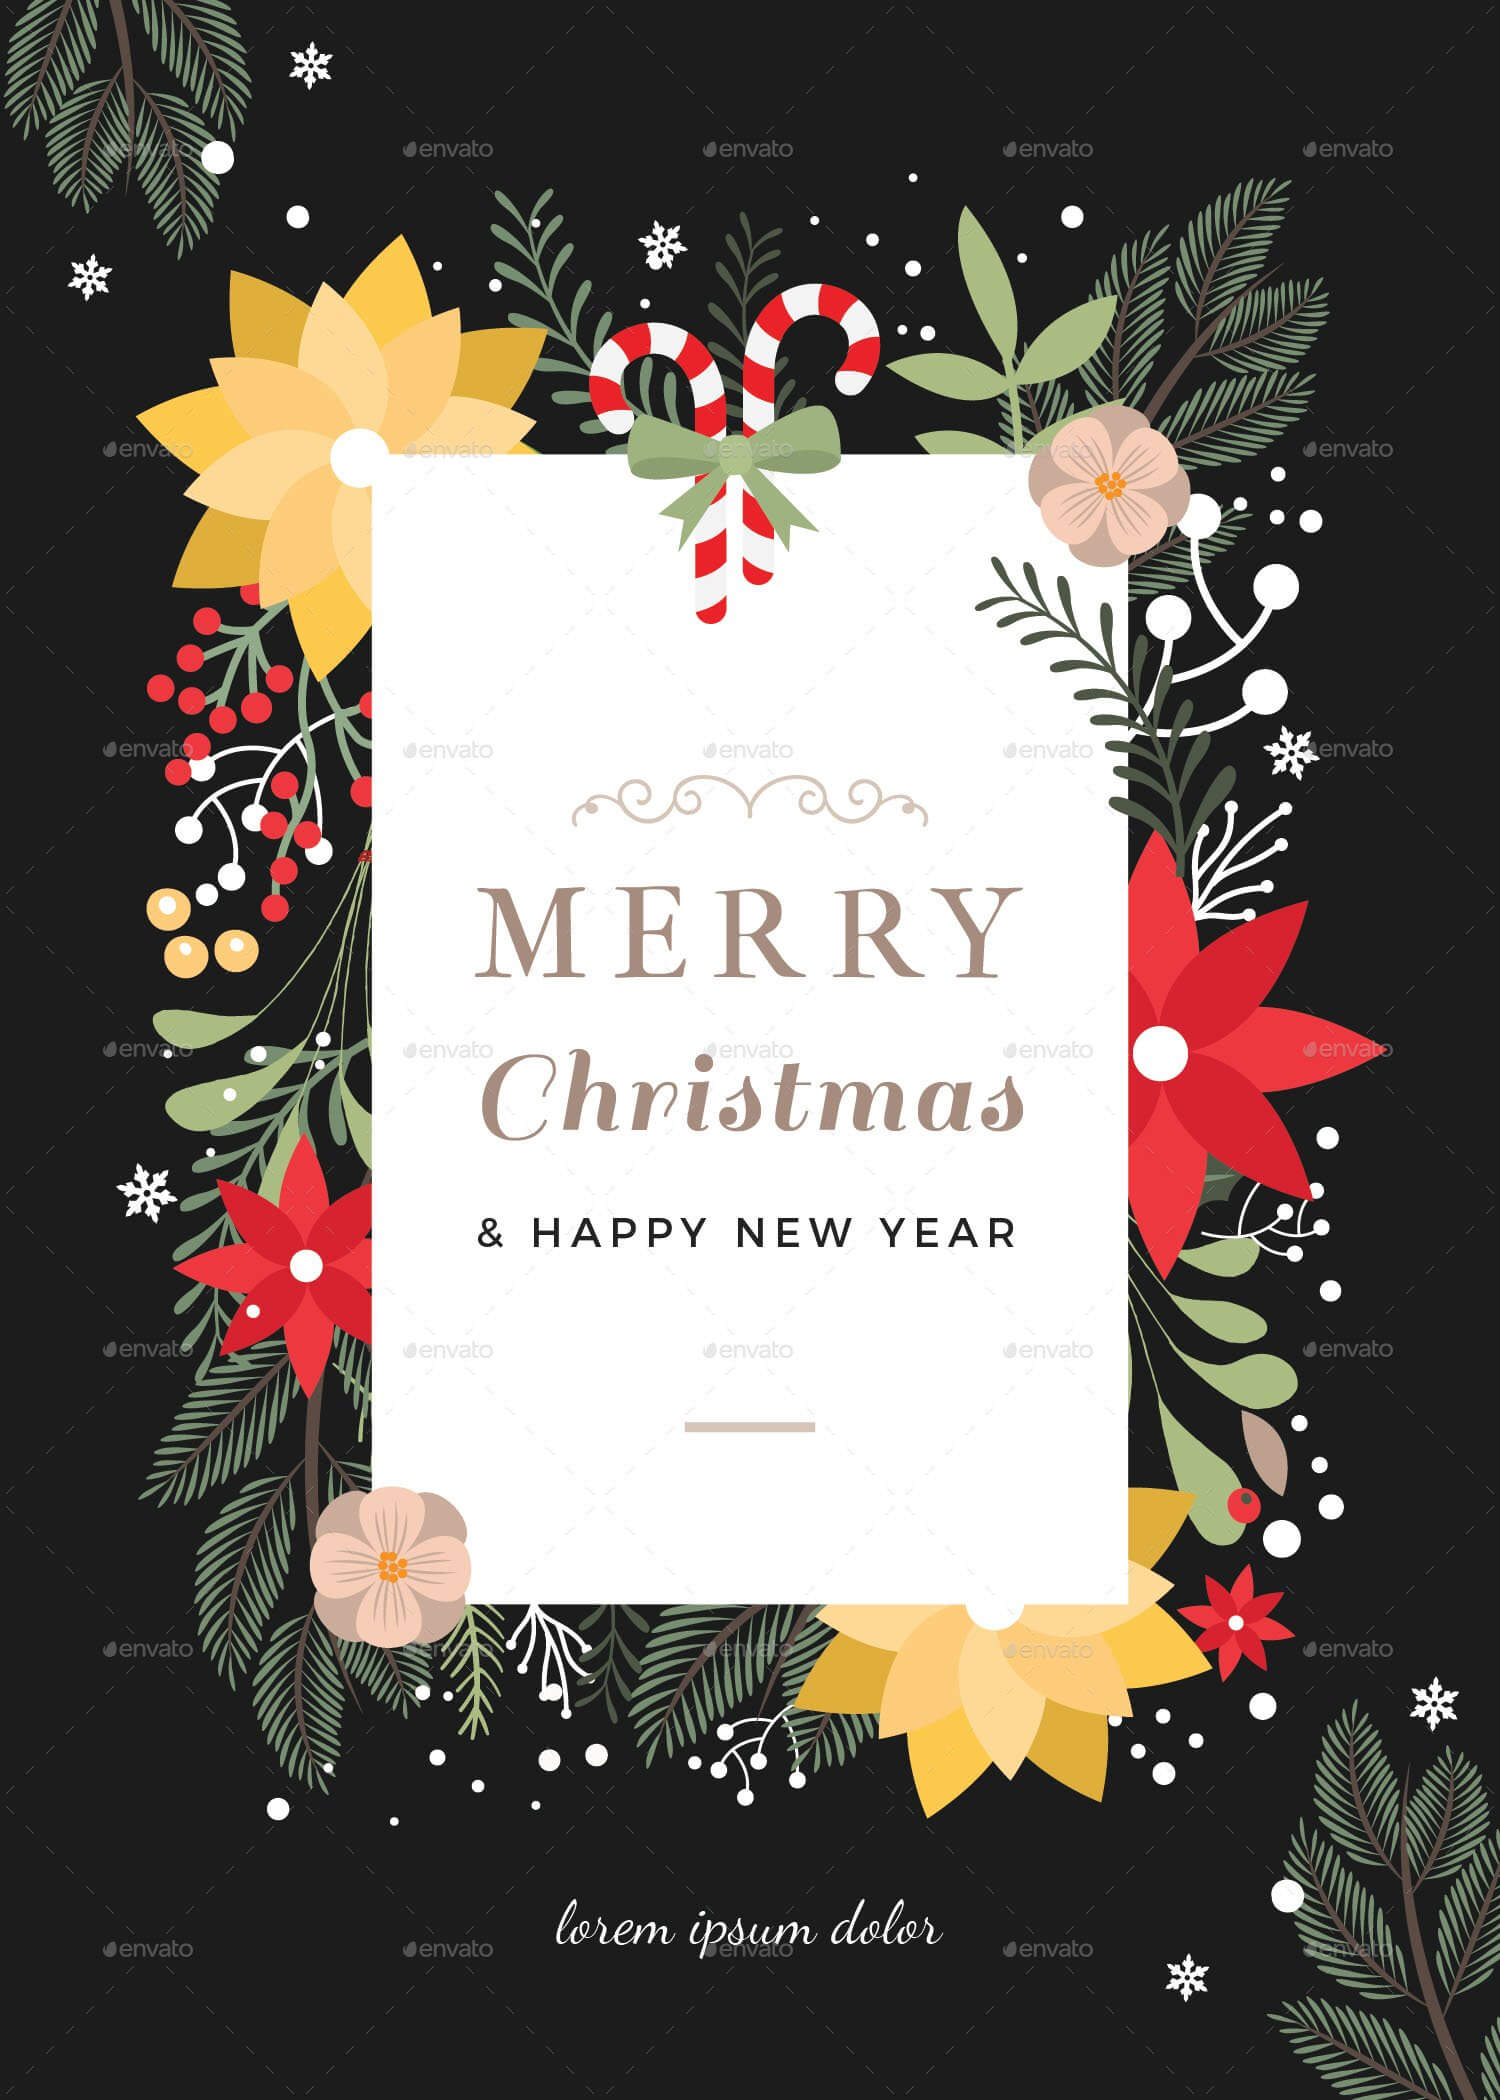 45+Christmas Premium & Free Psd Holiday Card Templates For Inside Free Christmas Card Templates For Photoshop